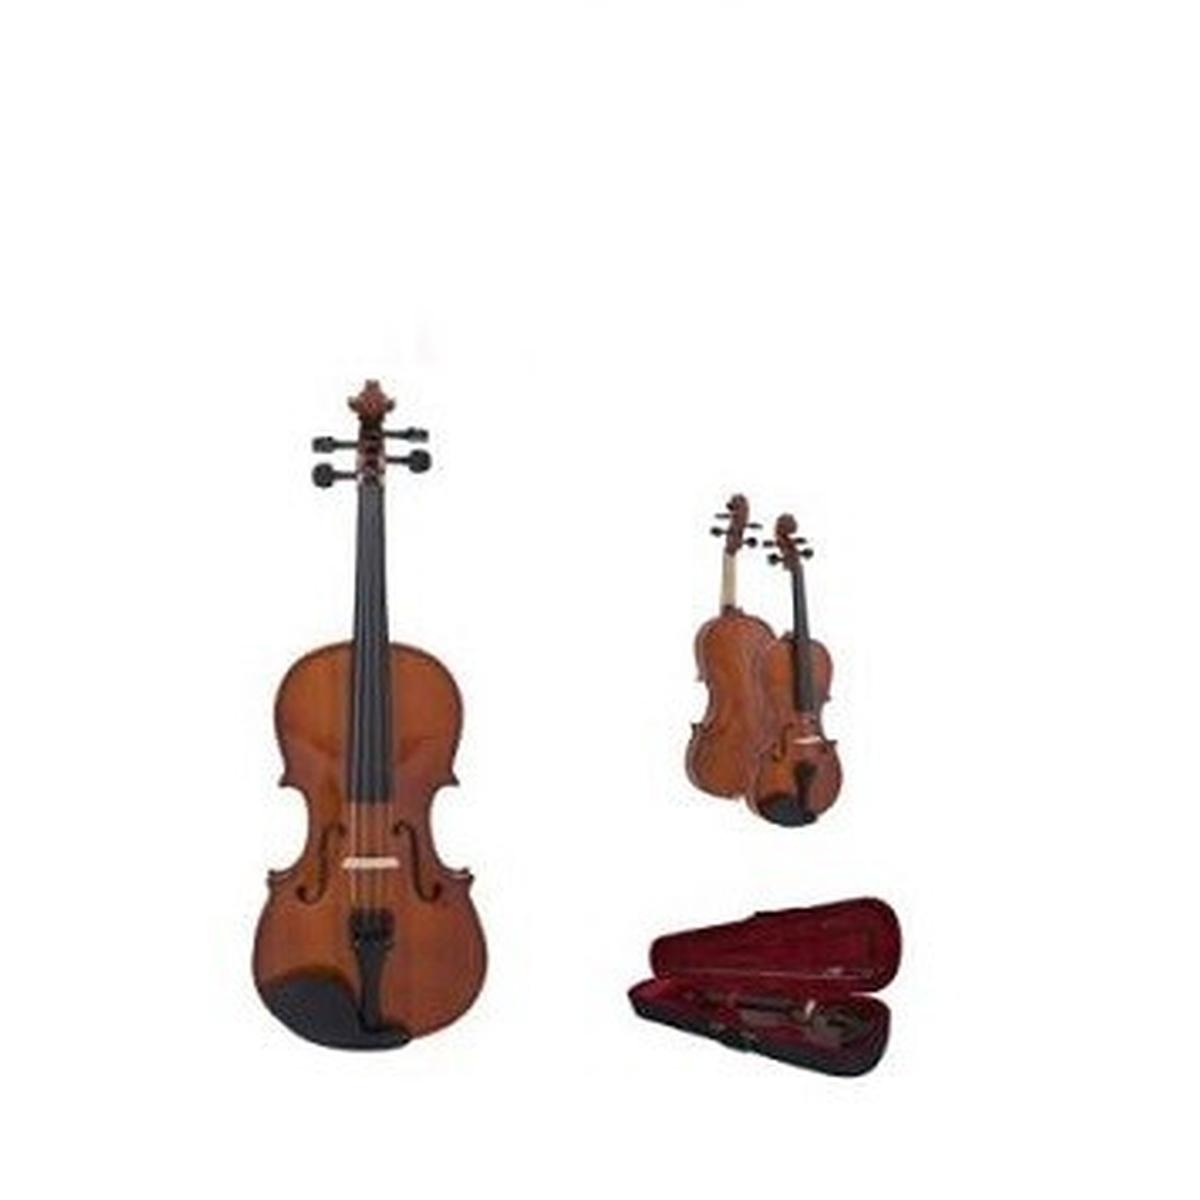 Vox meister violino 4/4 serie student